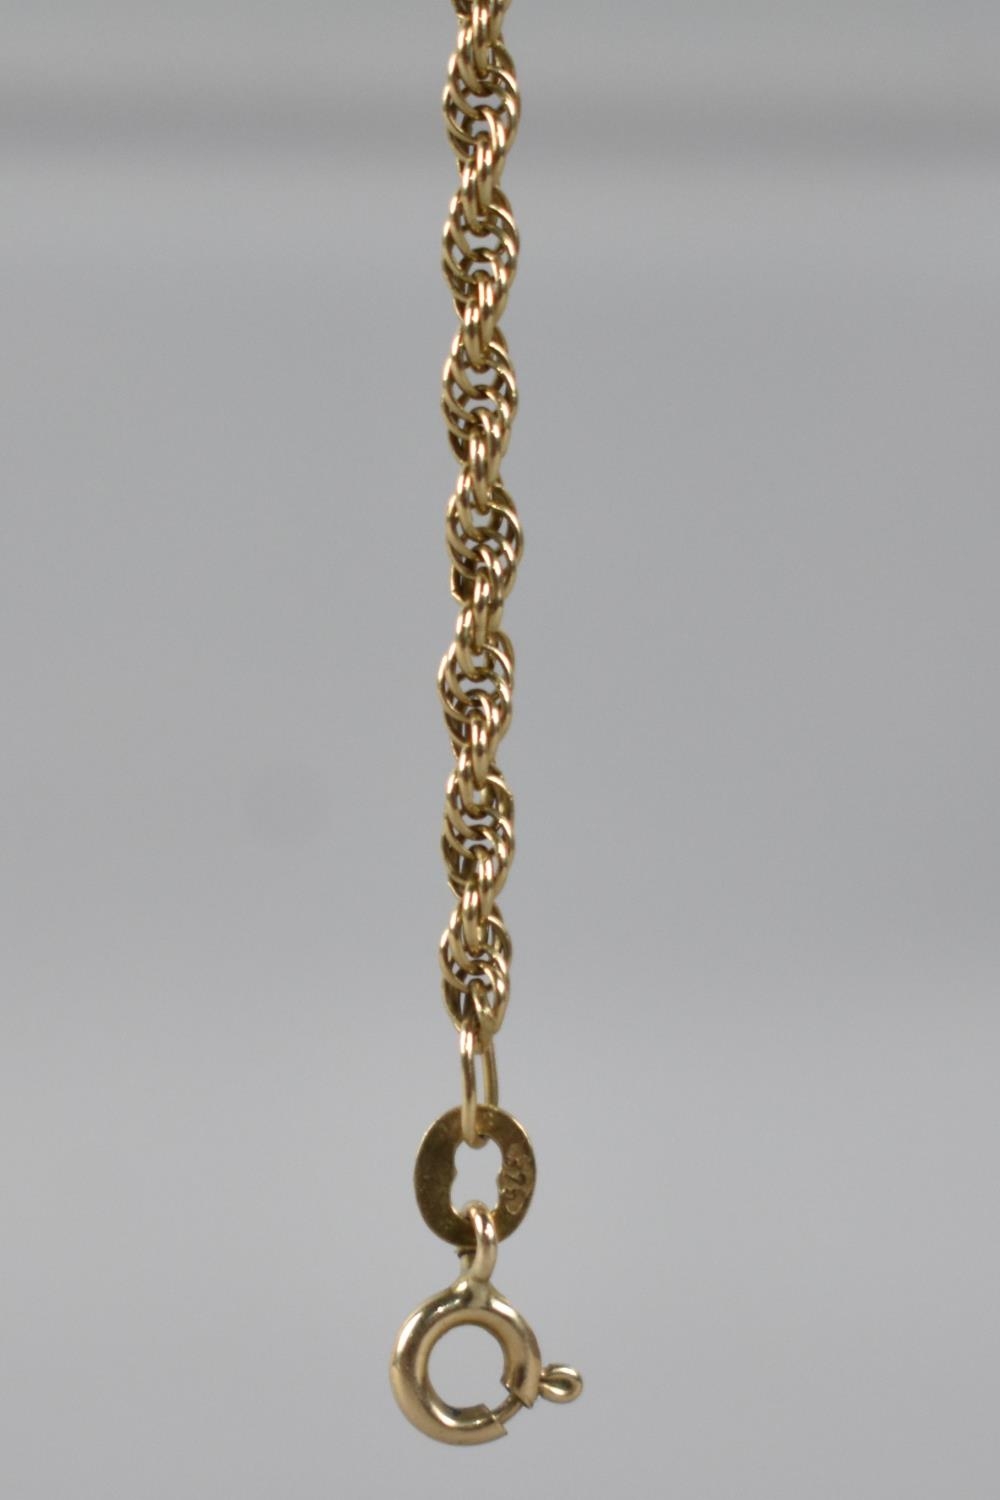 A 9ct Gold Rope Twist Bracelet, 2.5gms, 9.5cms Long - Image 2 of 2